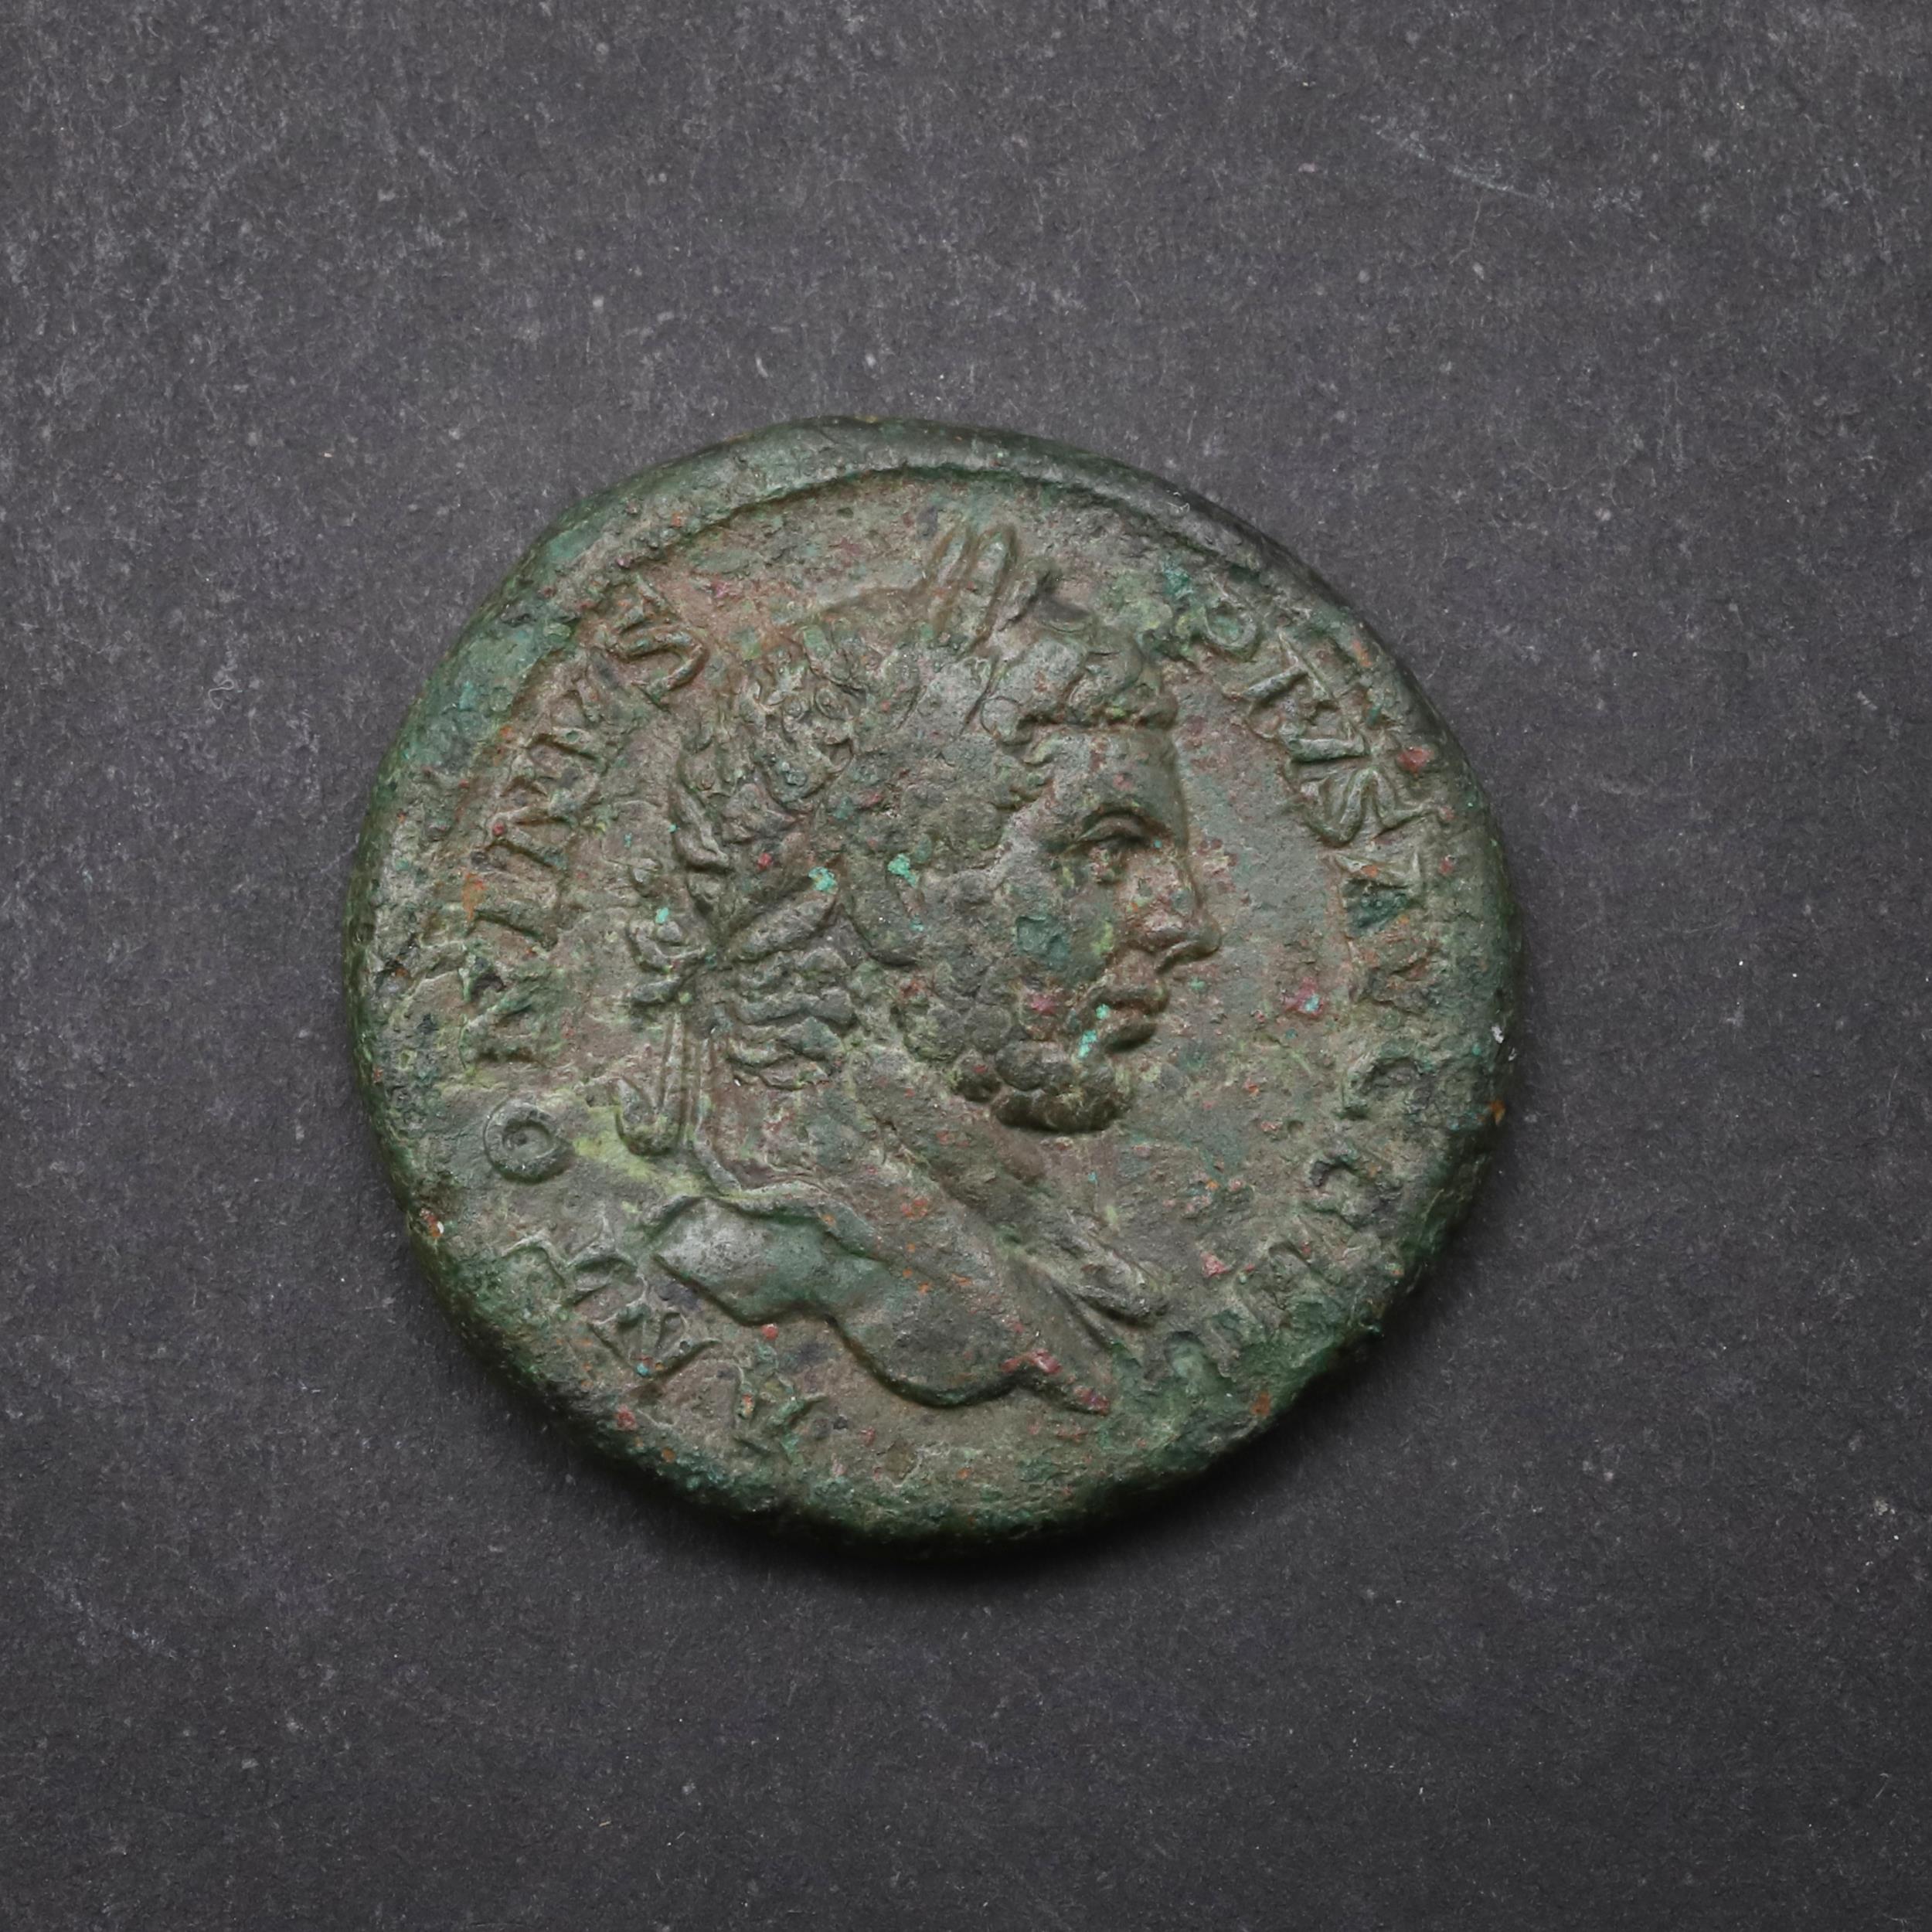 ROMAN IMPERIAL COINAGE: A COPPER AS OF ANTONINIUS PIUS WITH BRITANNIA REVERSE, 138-161 A.D.